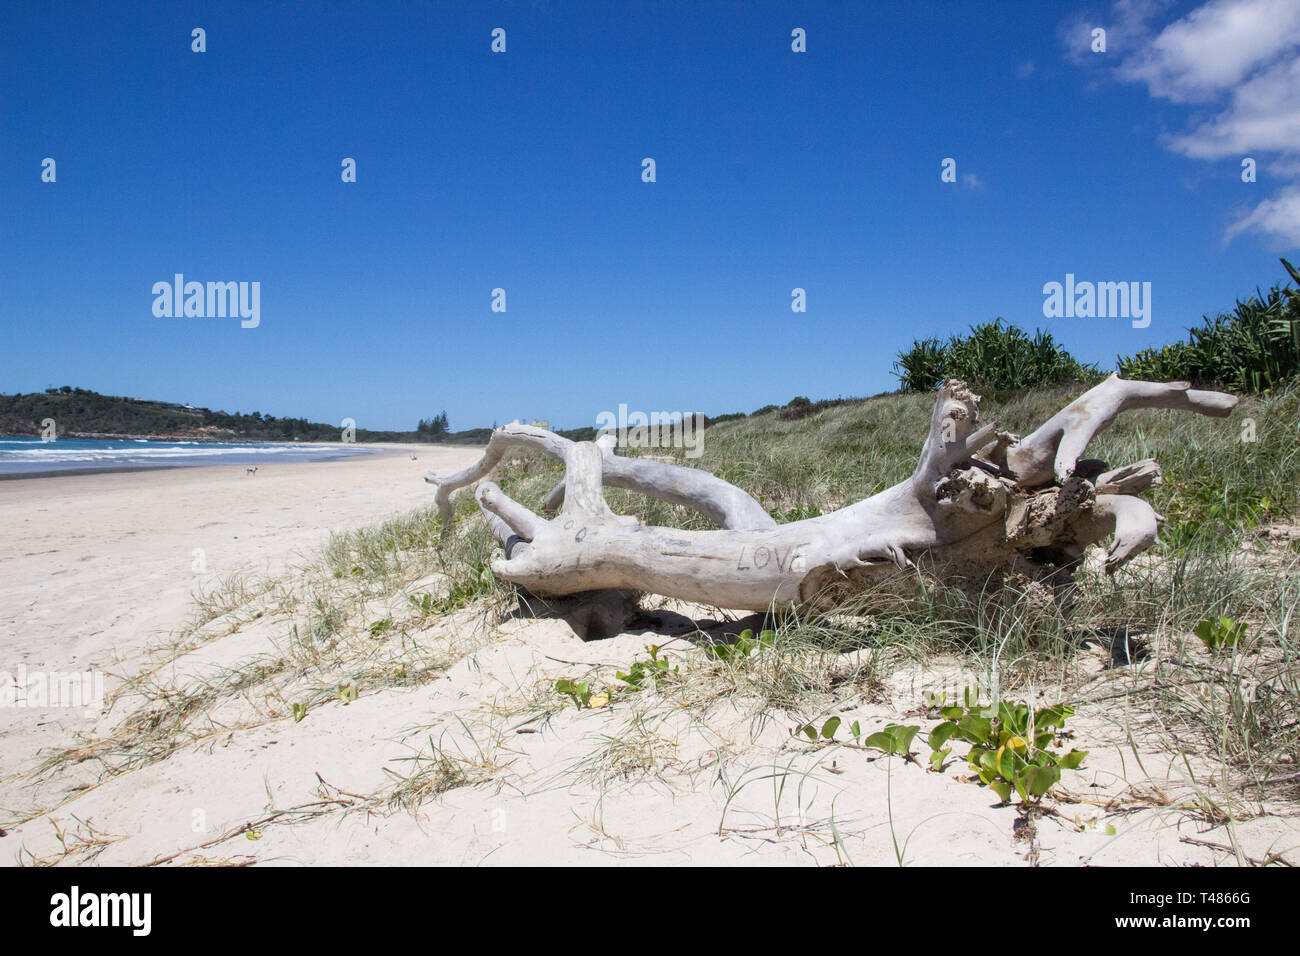 Baumstamm am Strand dans Australien, tout ce dont vous avez besoin amour Beschriftung ist Banque D'Images